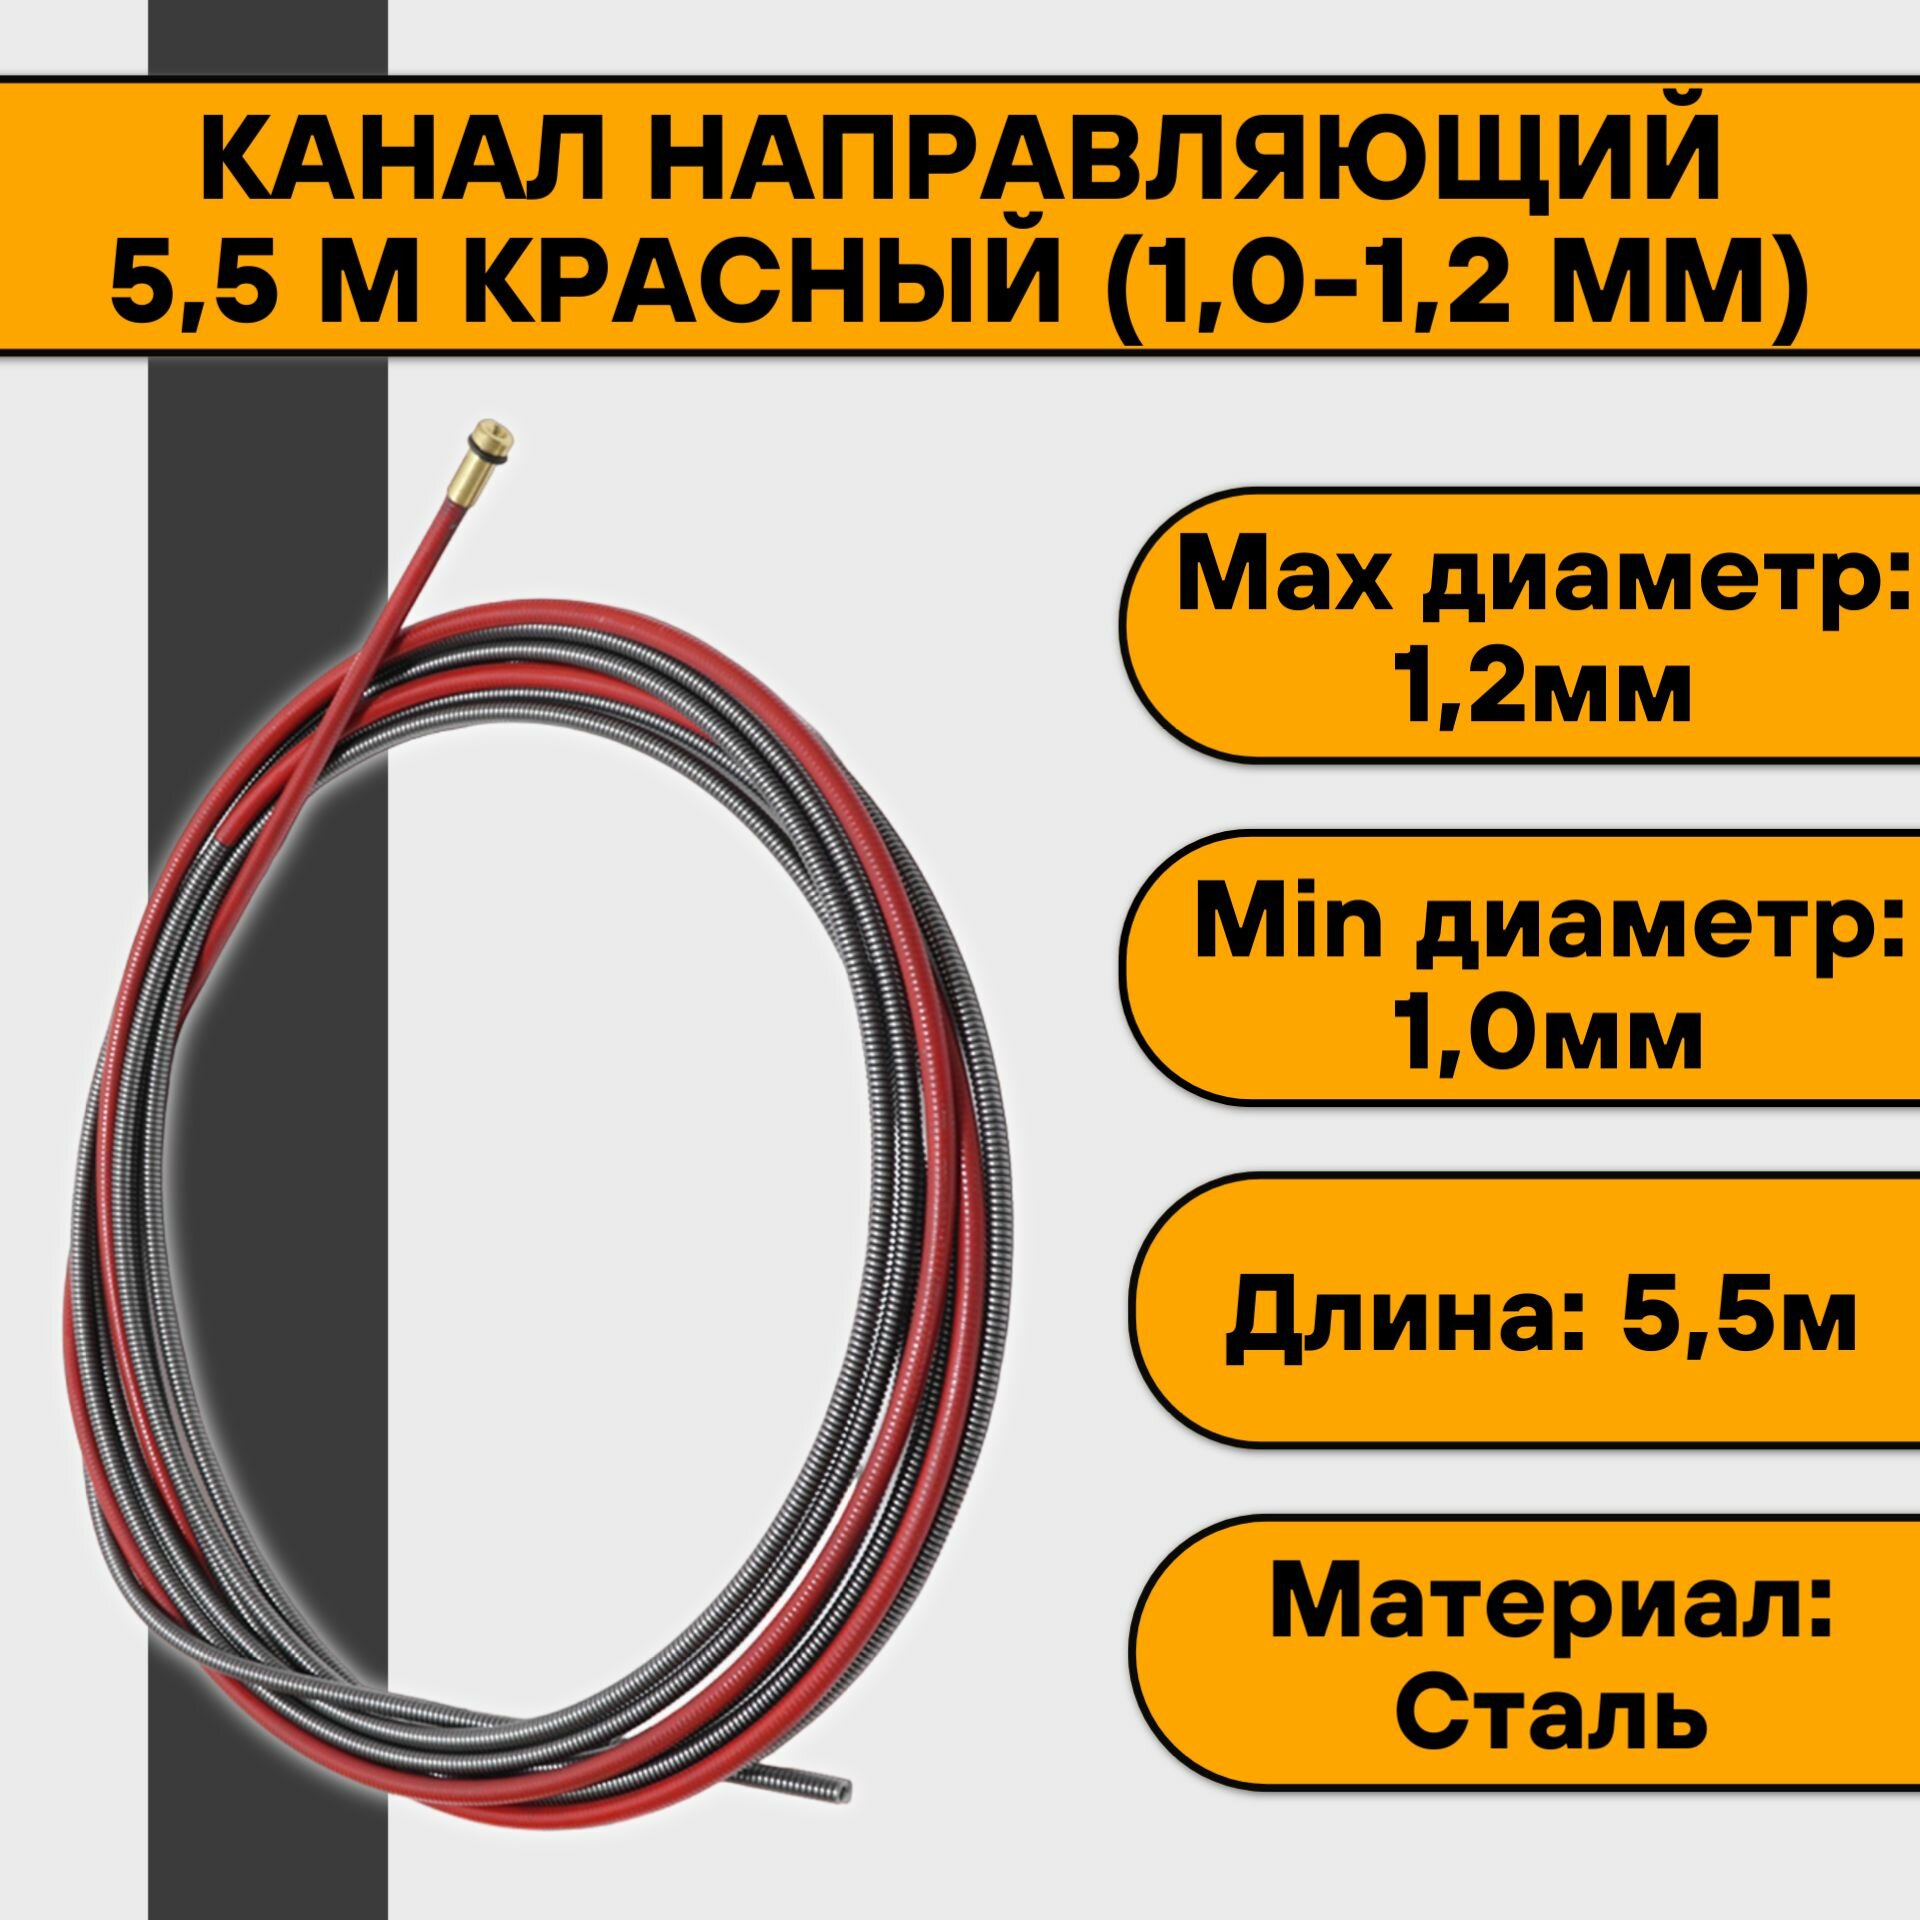 Канал направляющий 55 м красный (10-12 мм)